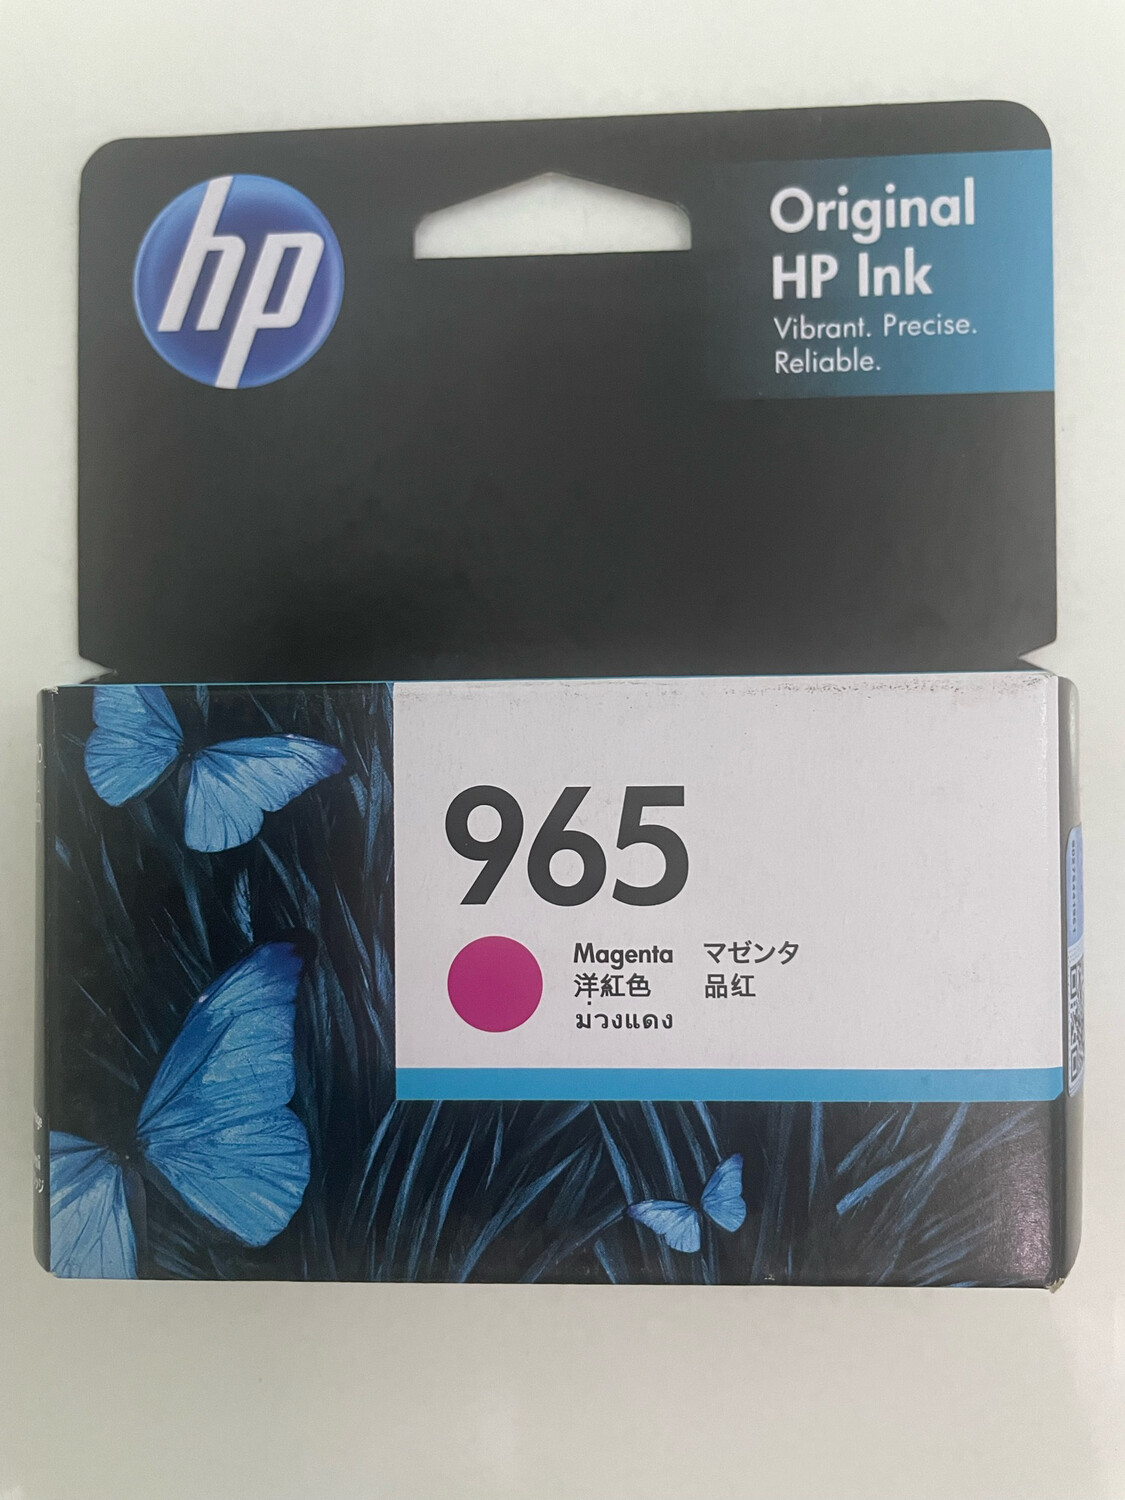 HP Officejet 965 Magenta ink Cartridge